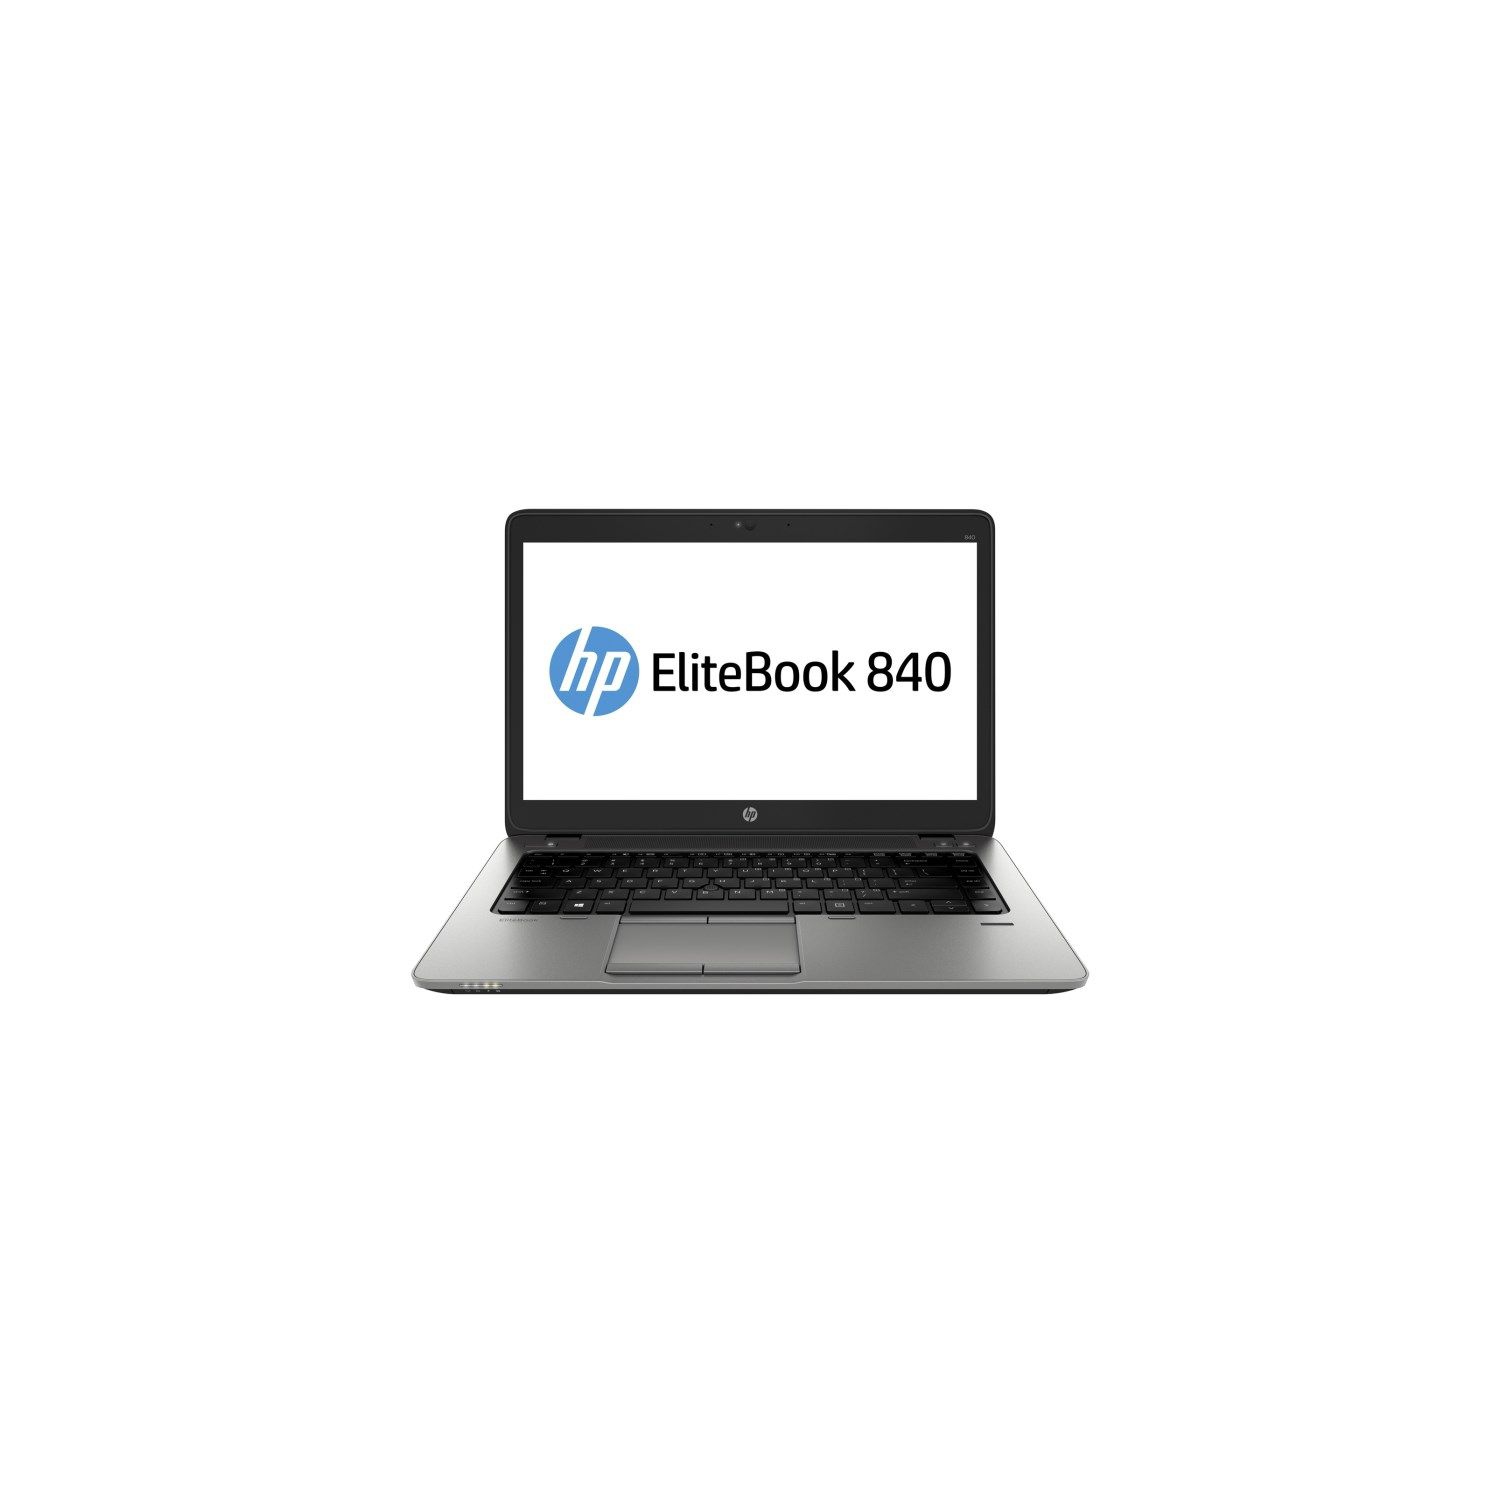 Refurbished (Good) - HP Elitebook 840G1 Core I5 4300u/ 8Gb/ 240 SSD/ Windows 10 pro